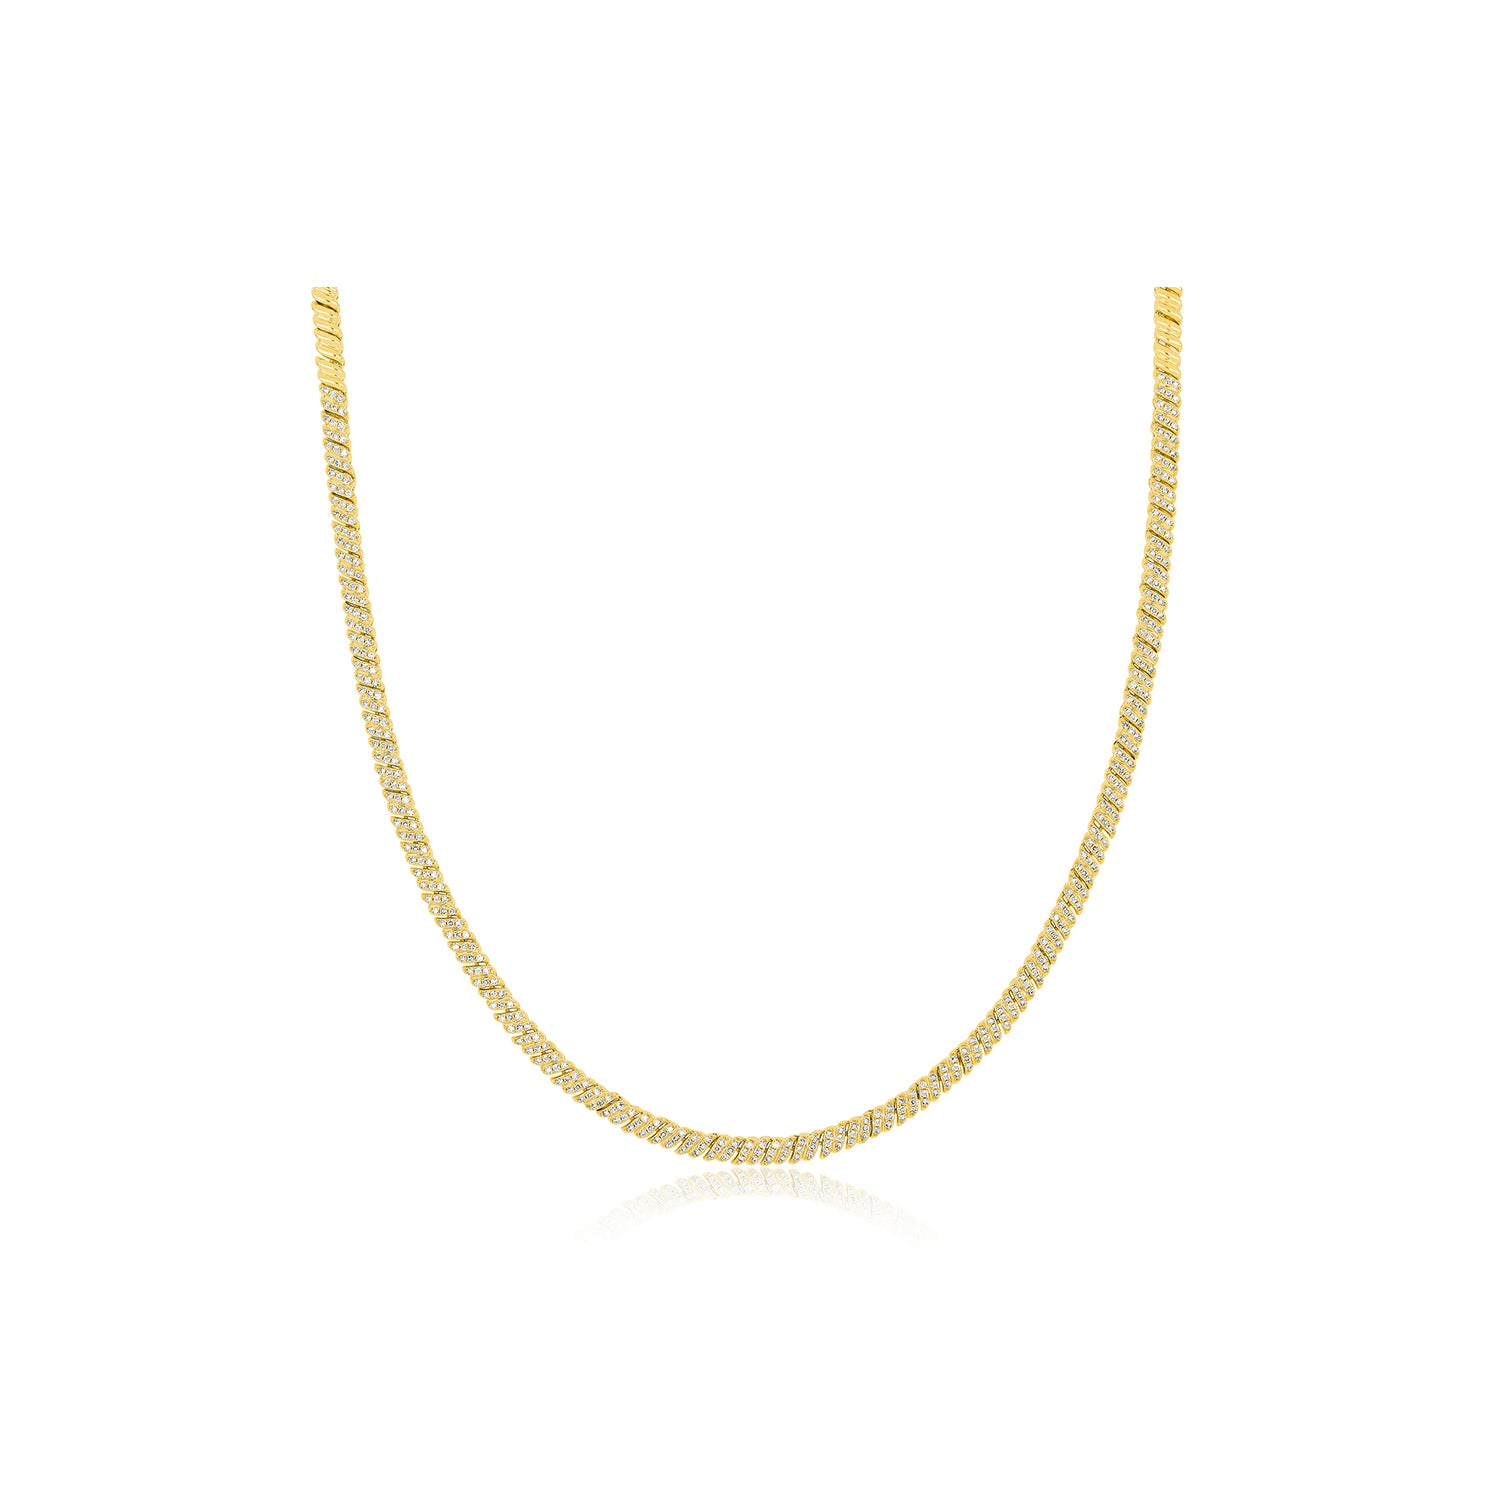 Diamond Twist Eternity Necklace in 14k yellow gold